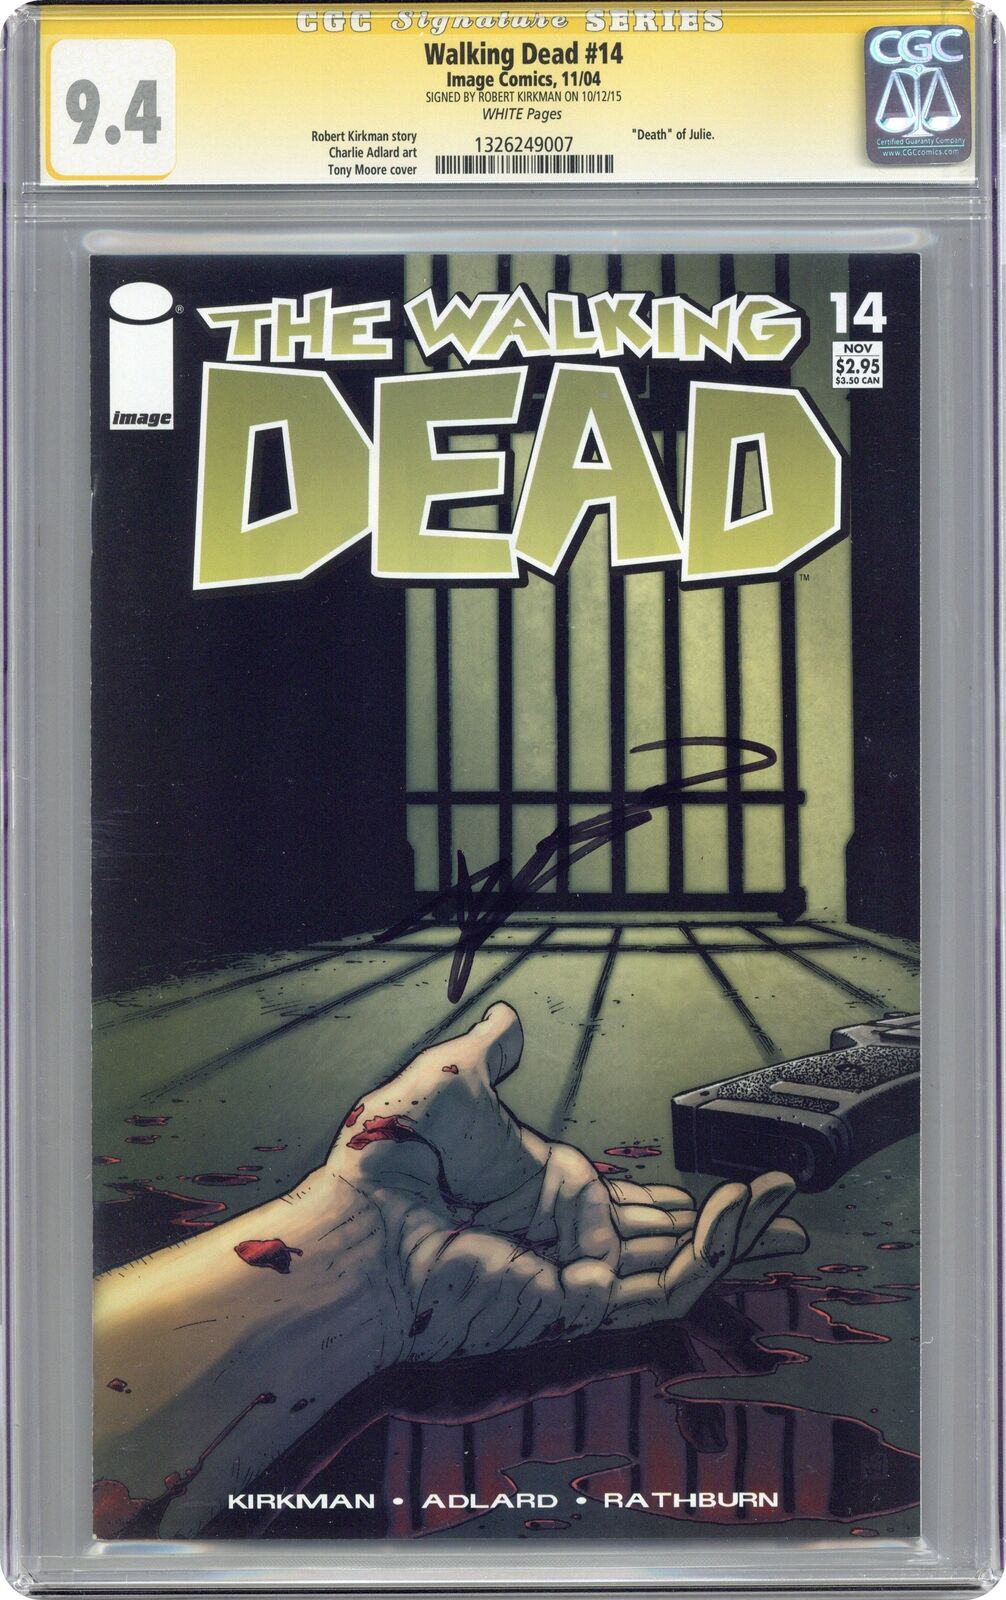 Walking Dead #14 CGC 9.4 SS Robert Kirkman 2004 1326249007